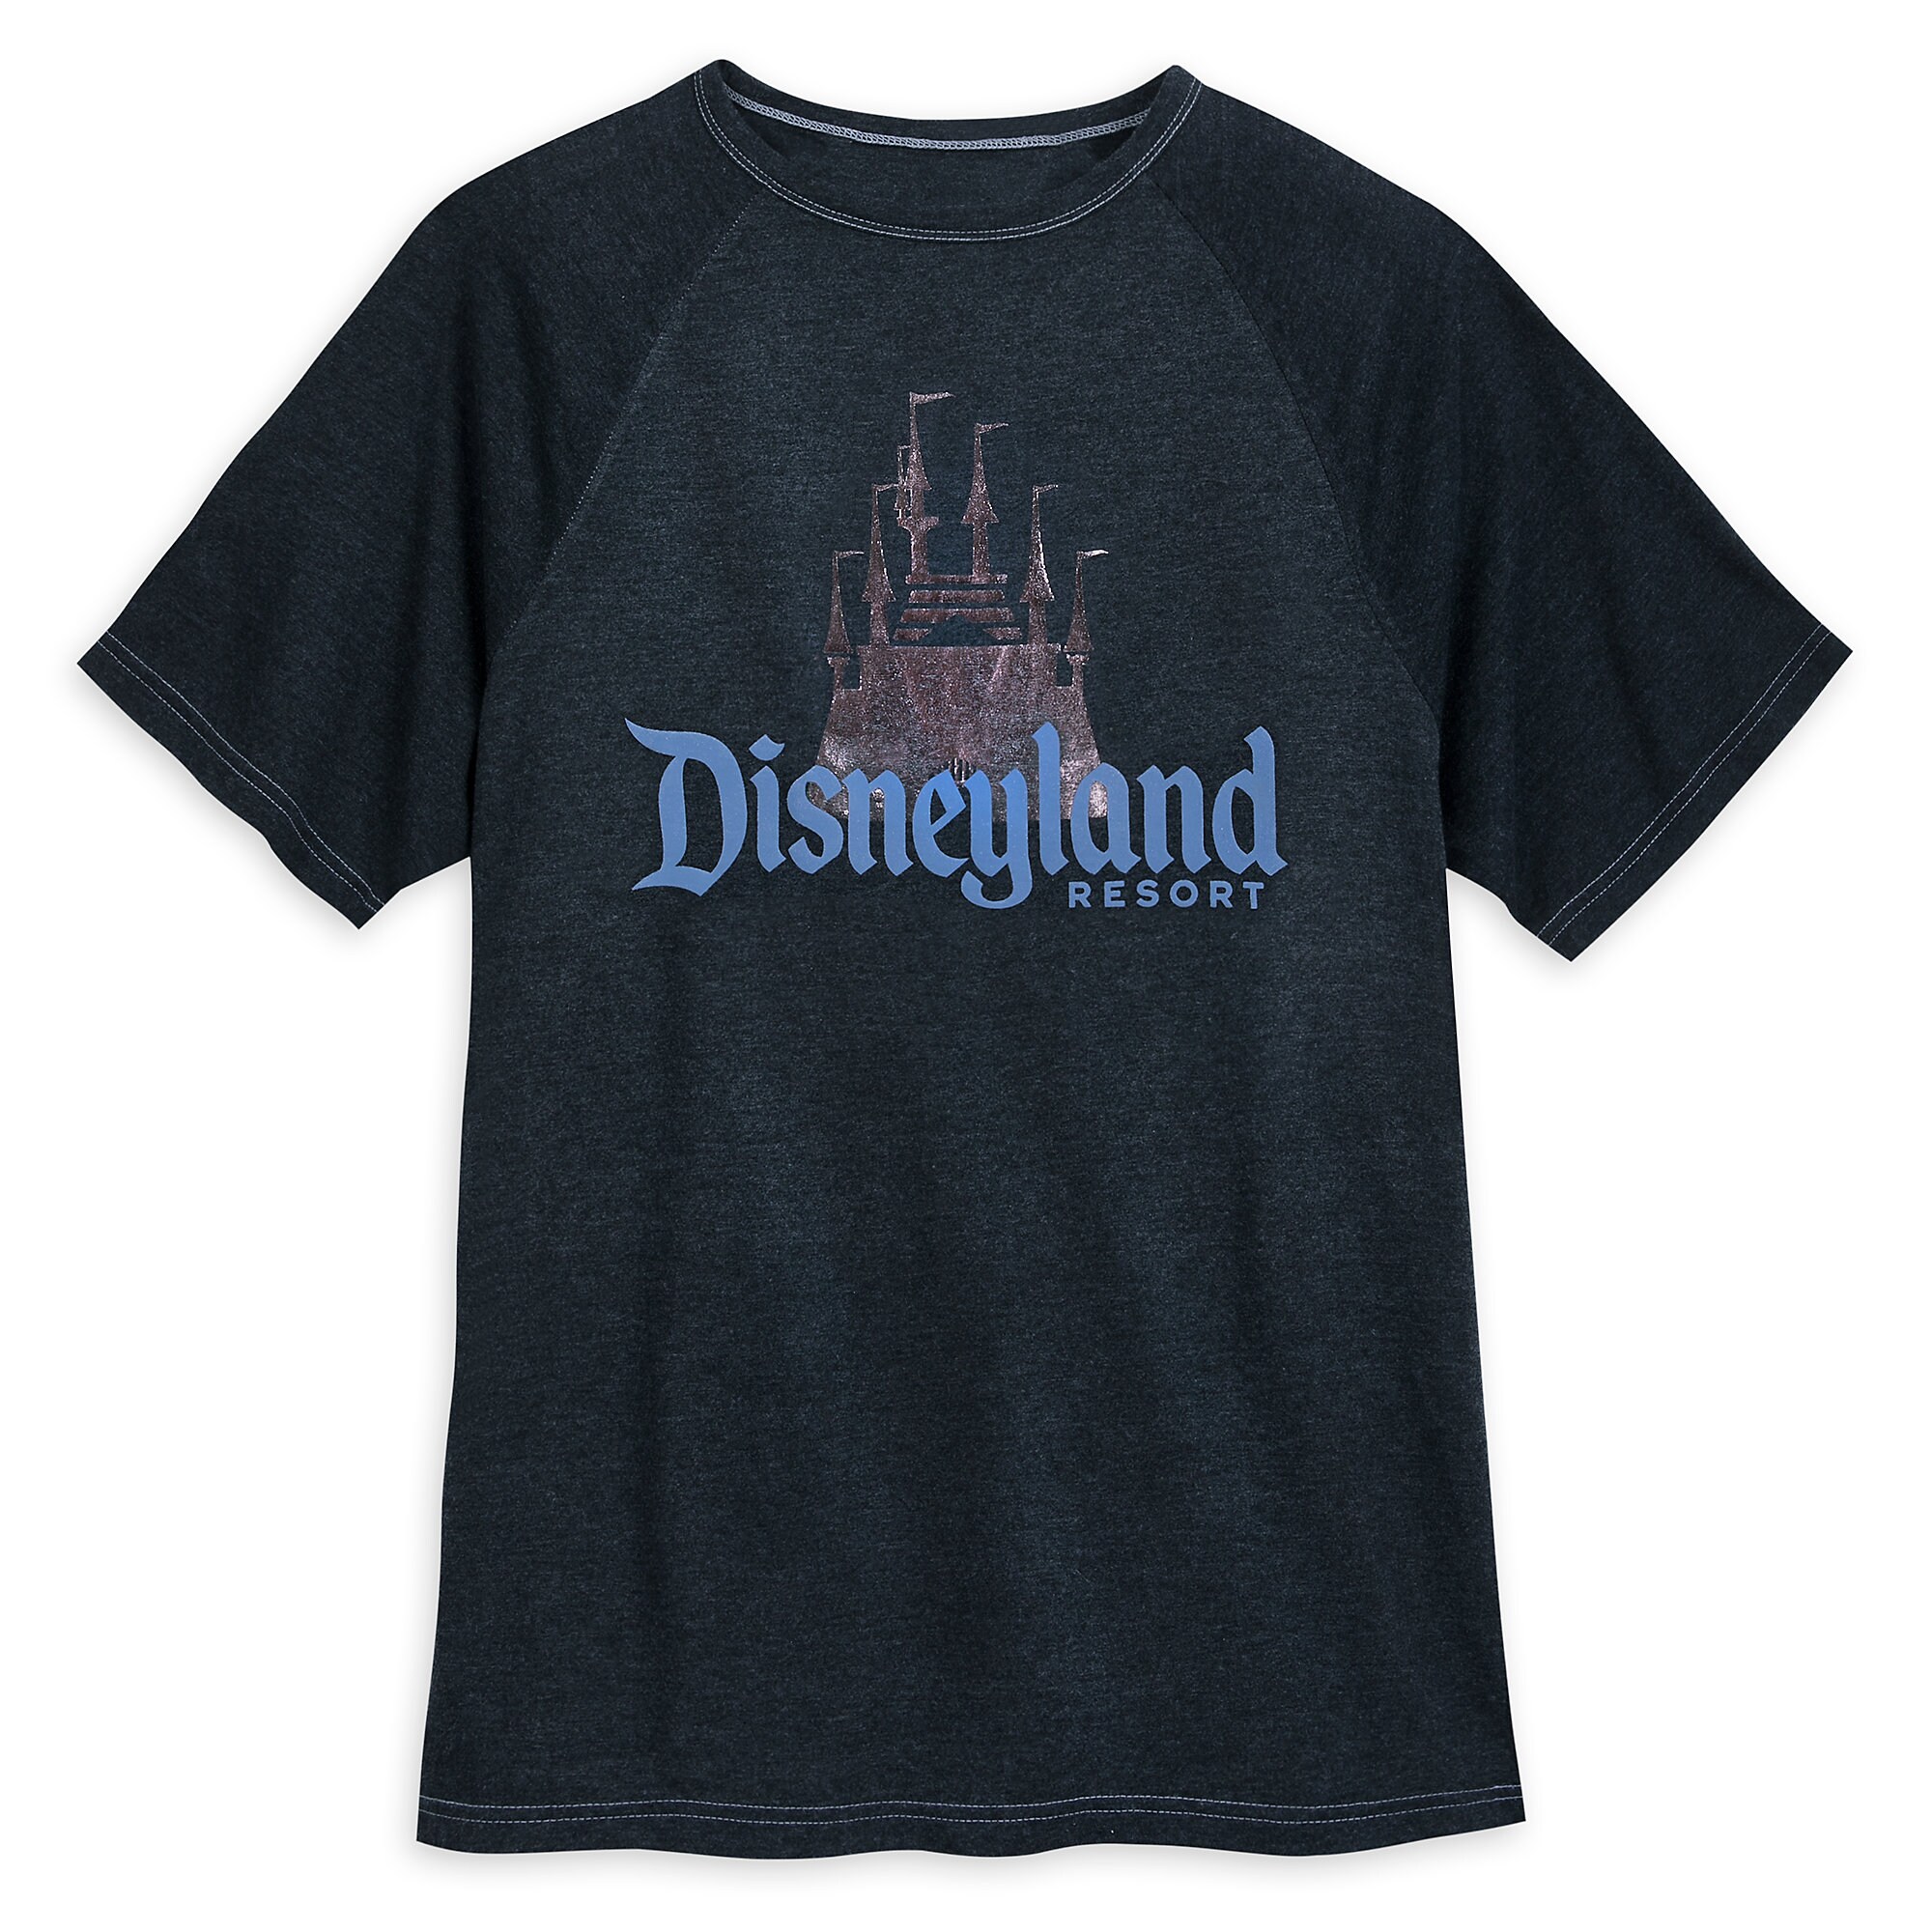 Disneyland Logo T-Shirt for Adults - Briar Rose Gold